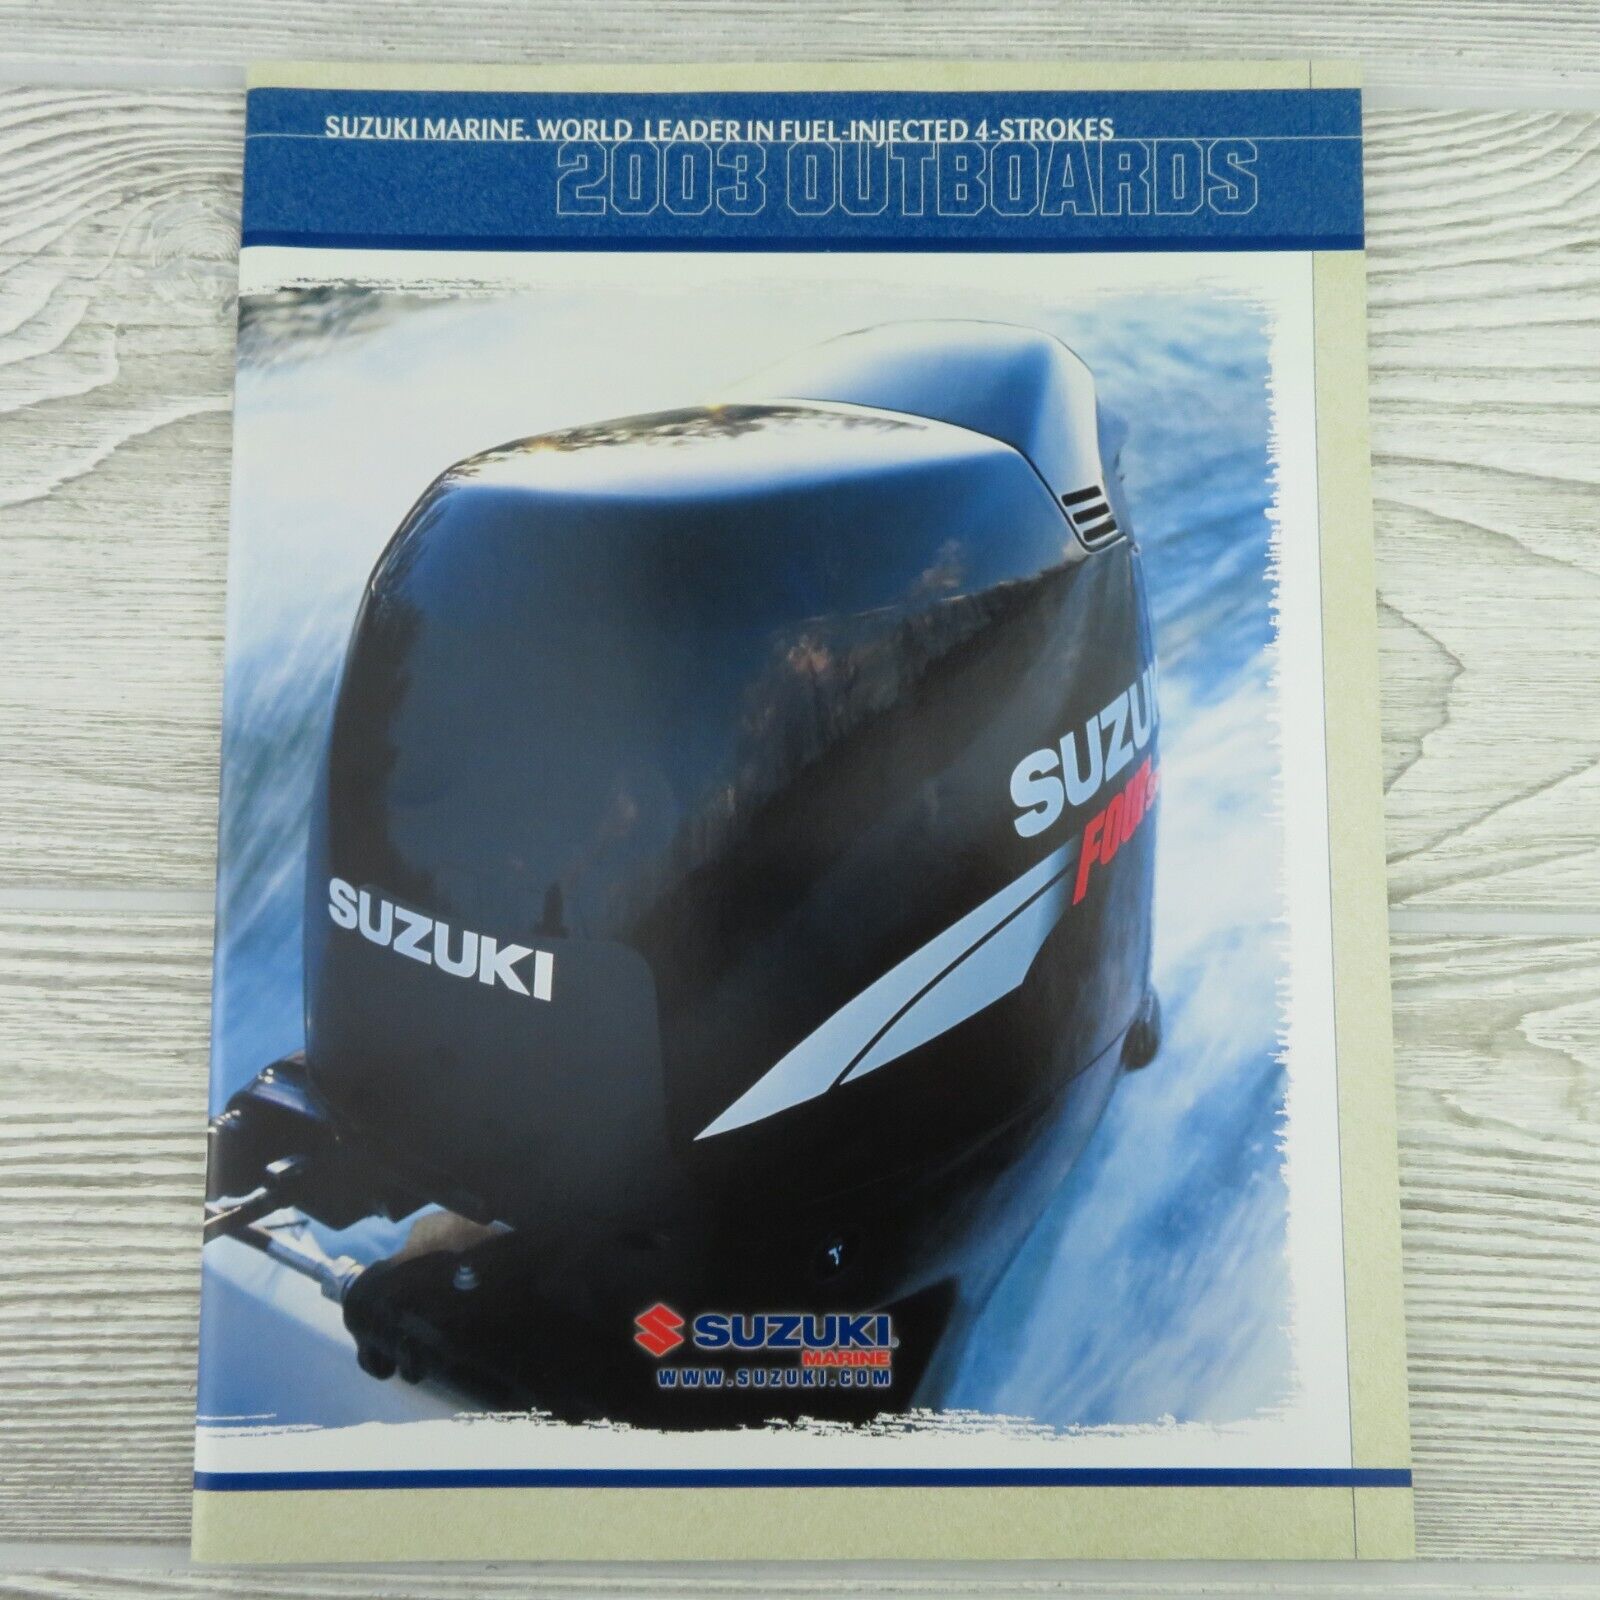 Suzuki - Outboard Motors - 2003 - Brochure / Catalog - Dealership - Color - VTG